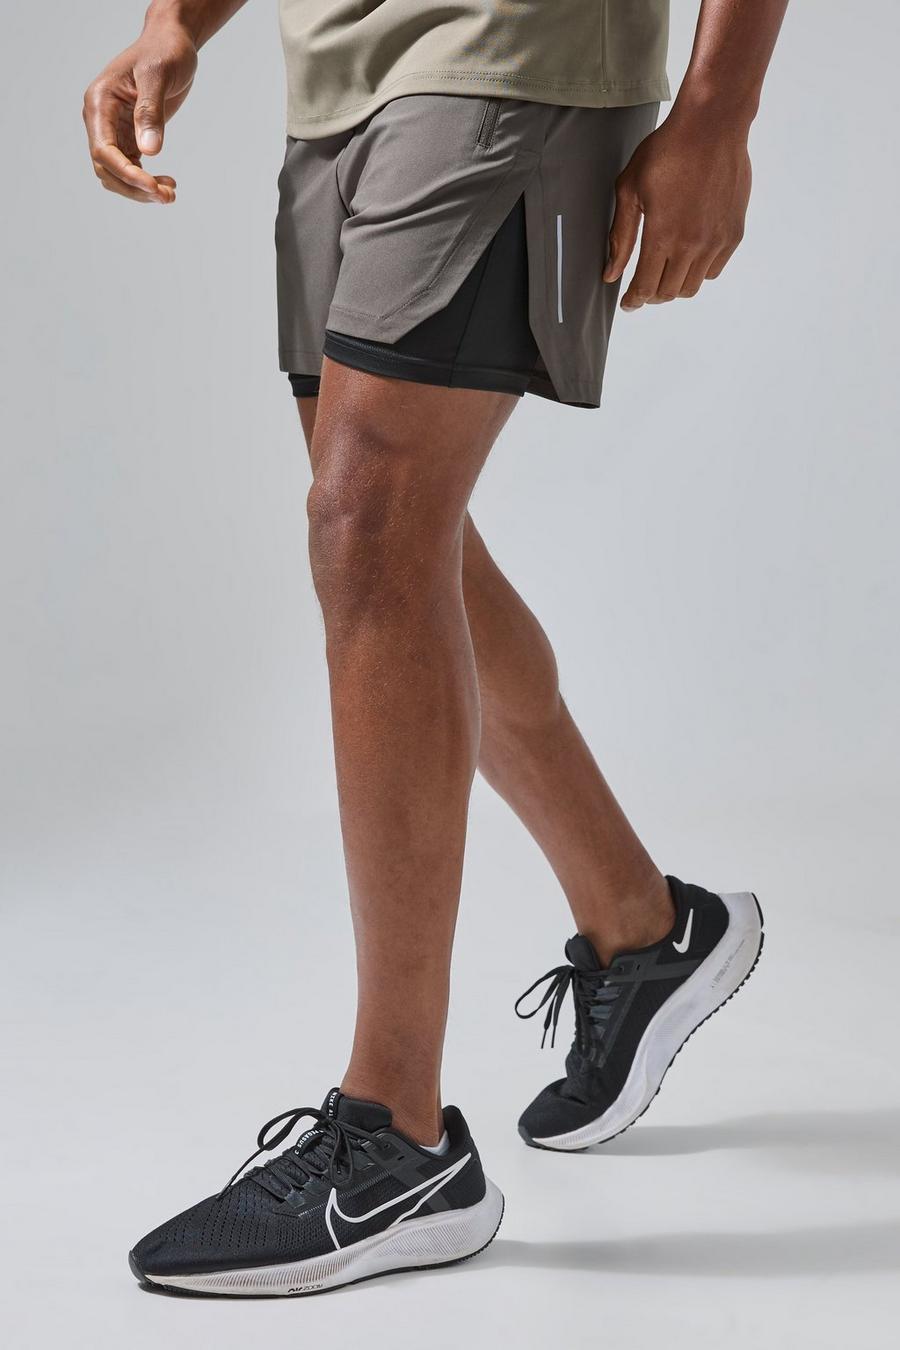 Pantaloncini Man Active 2 in 1 con spacco estremo da 7,6 cm, Khaki